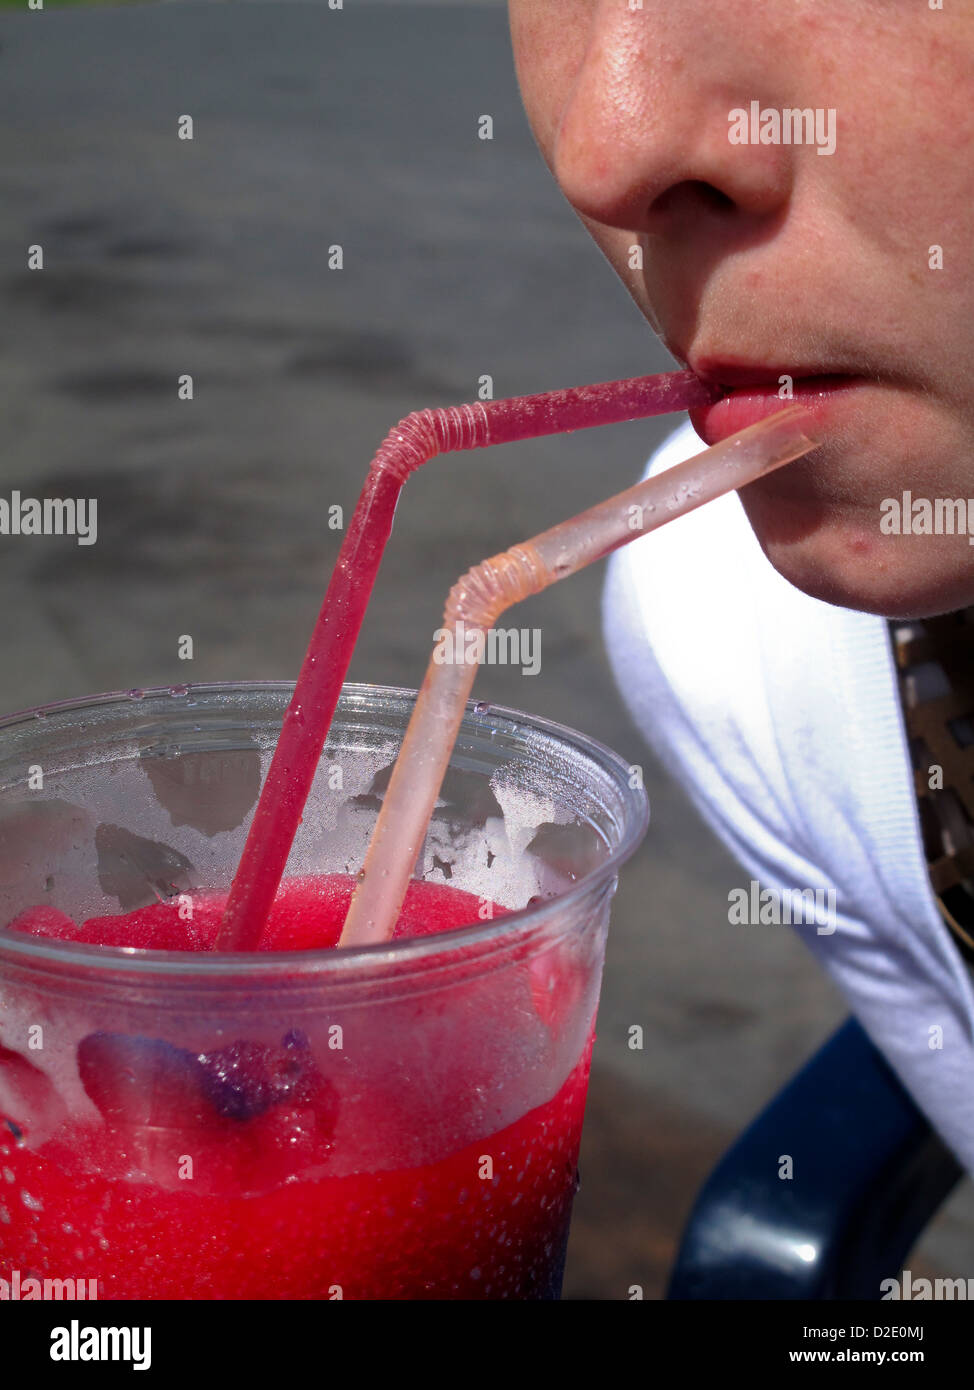 https://c8.alamy.com/comp/D2E0MJ/young-girl-drinking-slushy-through-straw-D2E0MJ.jpg